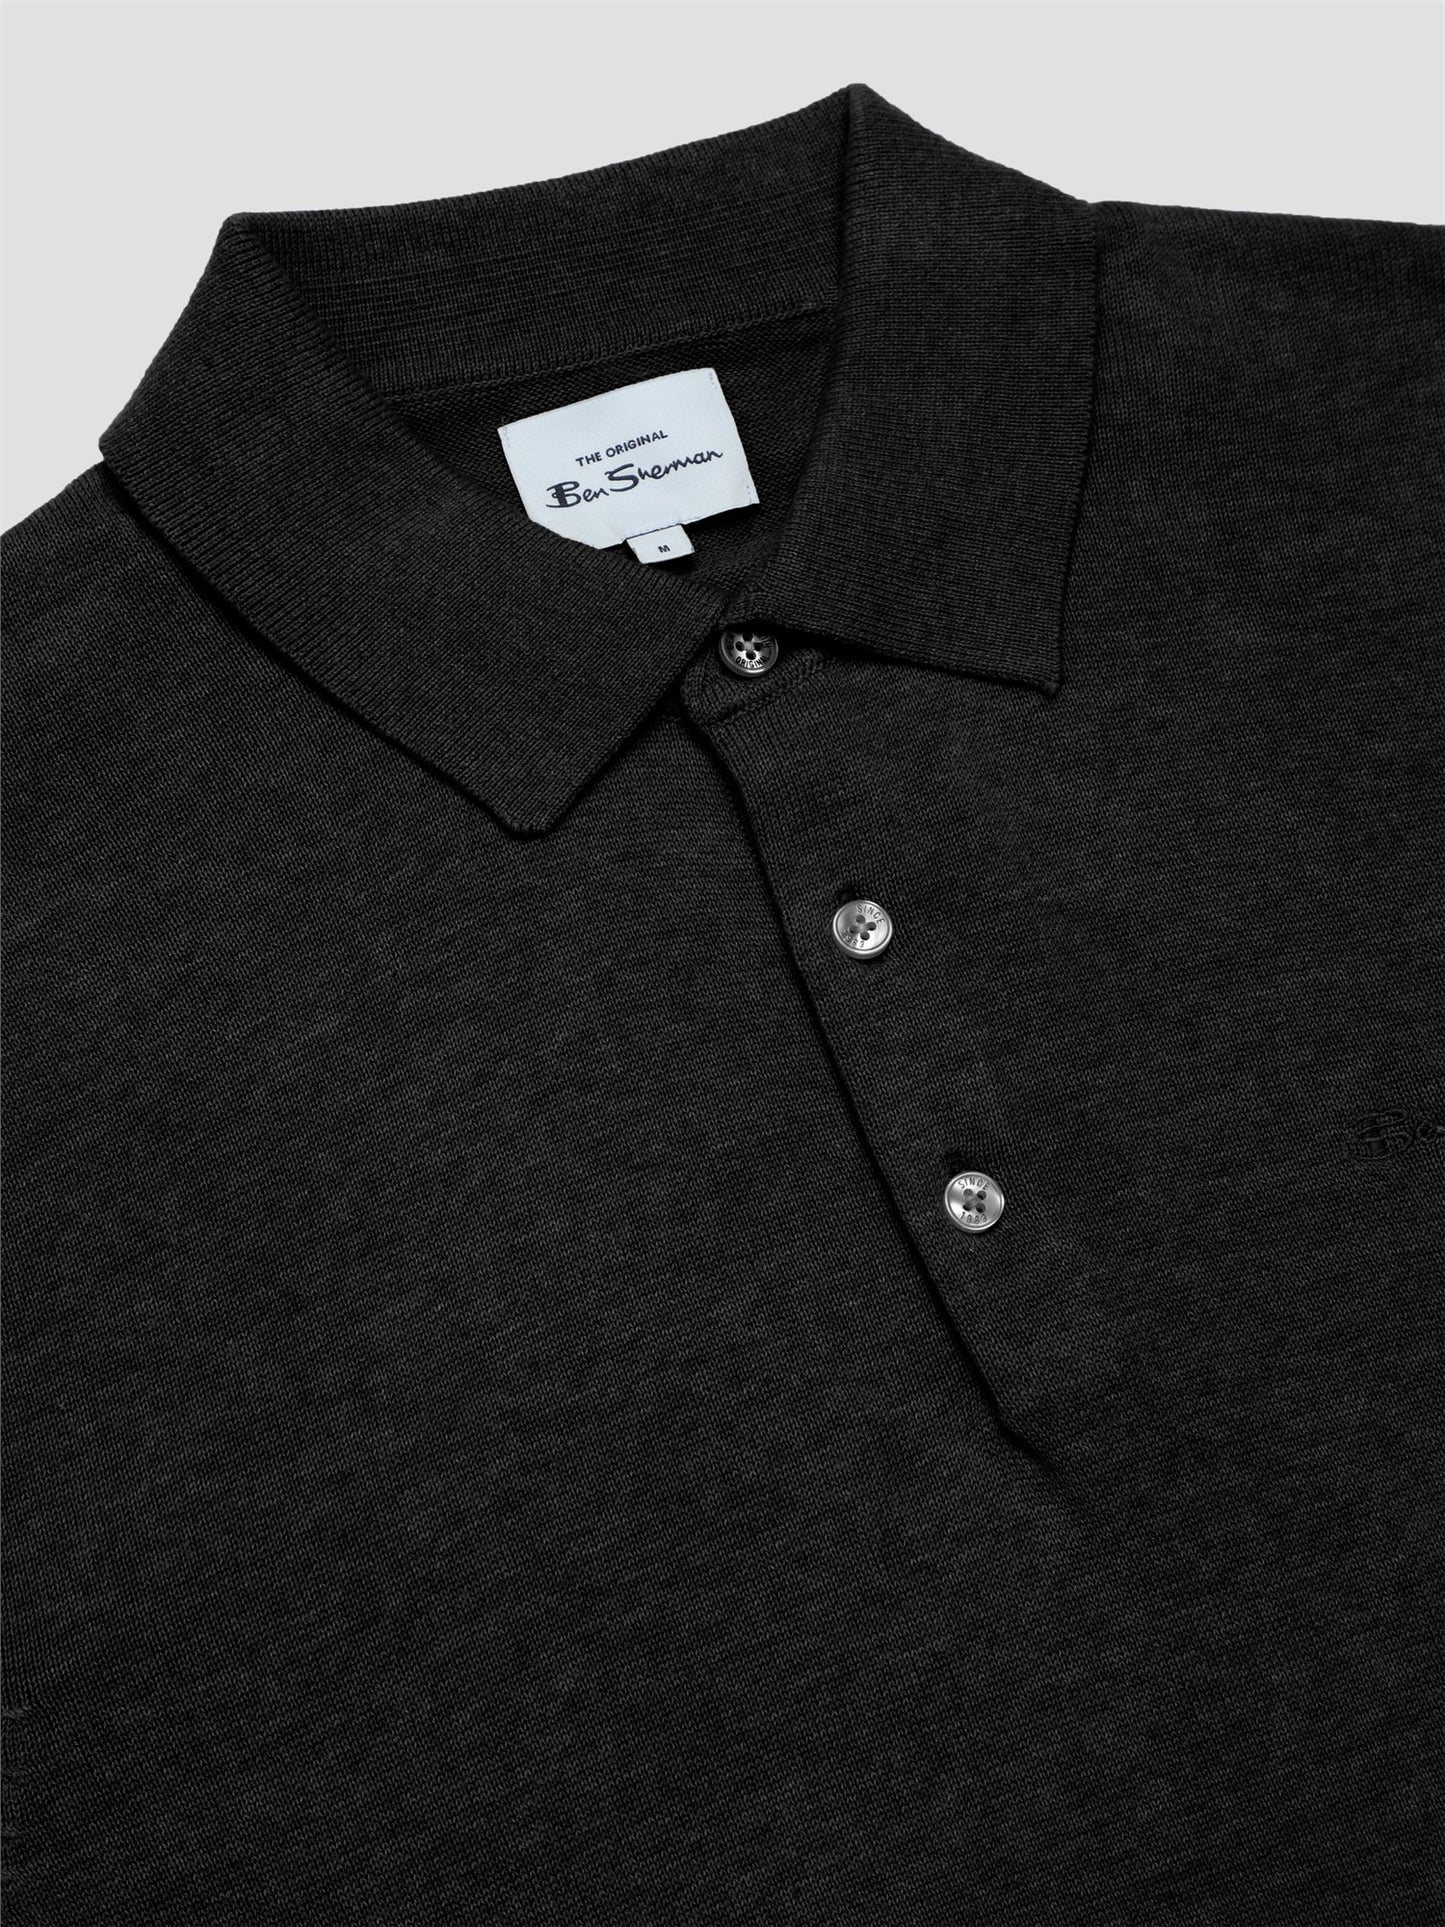 Ben Sherman Men's 0063352 SS Signature Knitted Polo Shirt Dark Navy